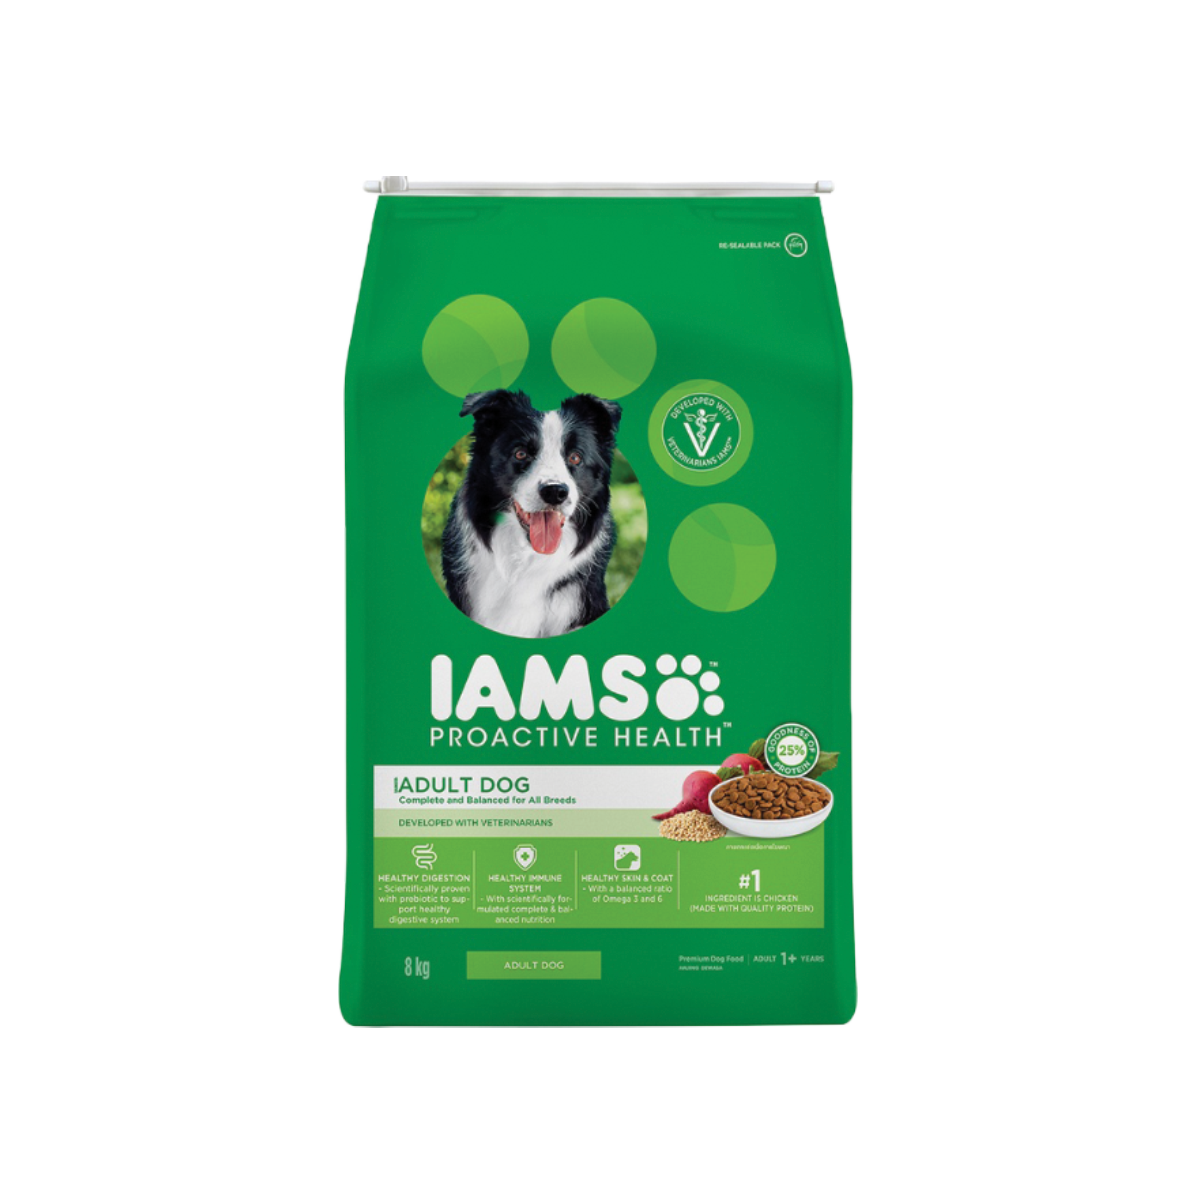 IAMS Proactive Health Adult Dog ไอแอมส์ โปรแอคทีฟ เฮลท์ สุนัขโต ขนาด 8 กิโลกรัม